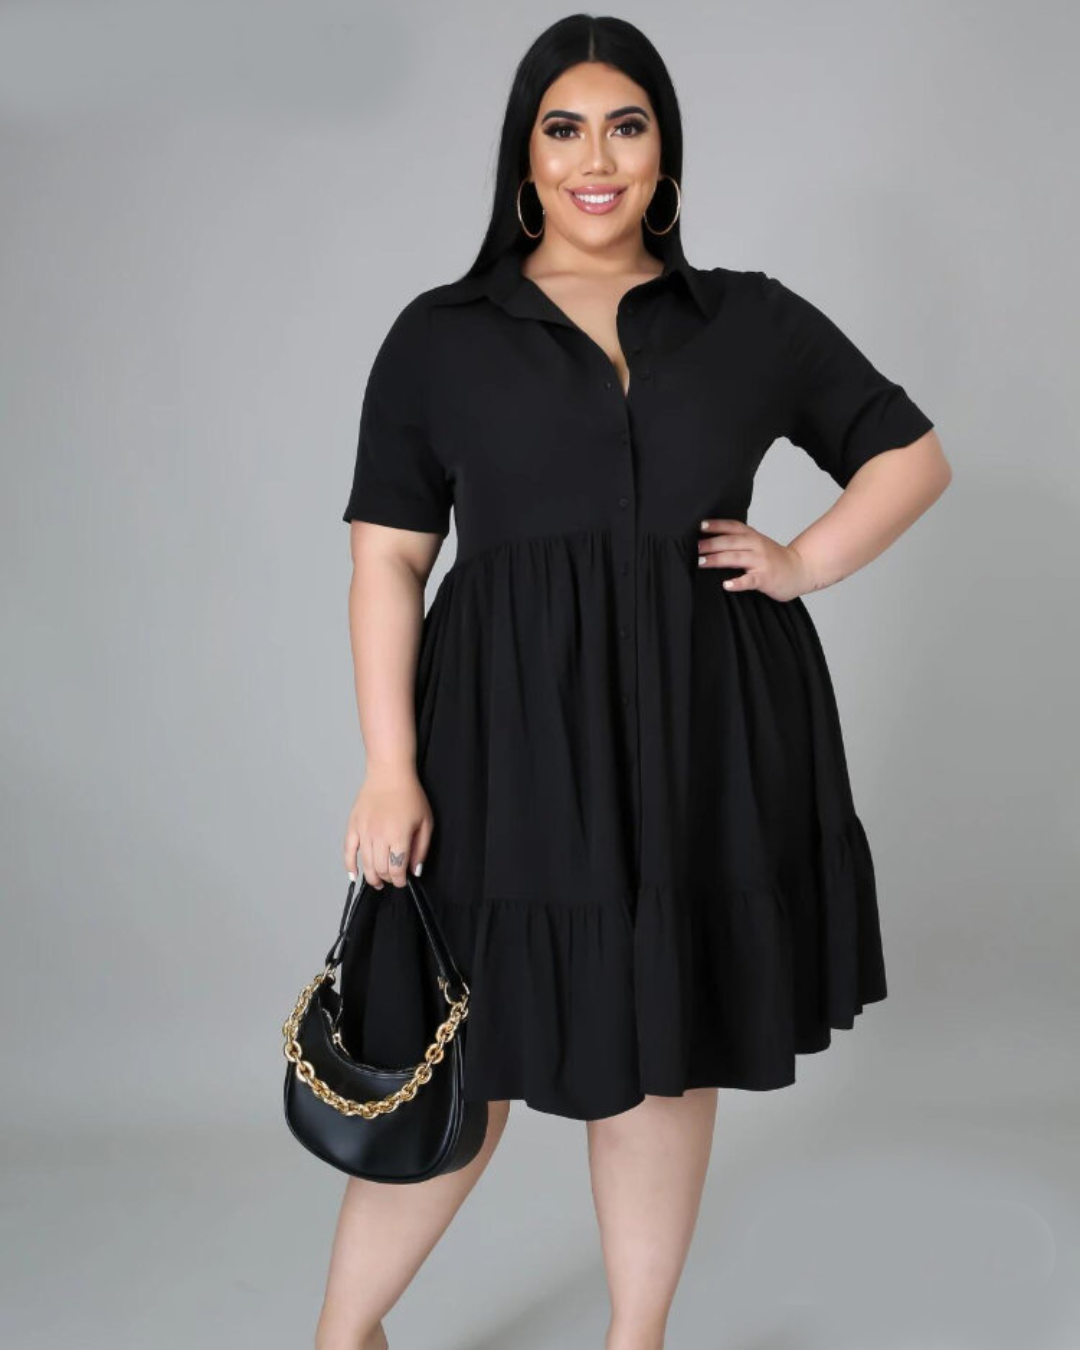 Plus Size Blouse Dress Black L 